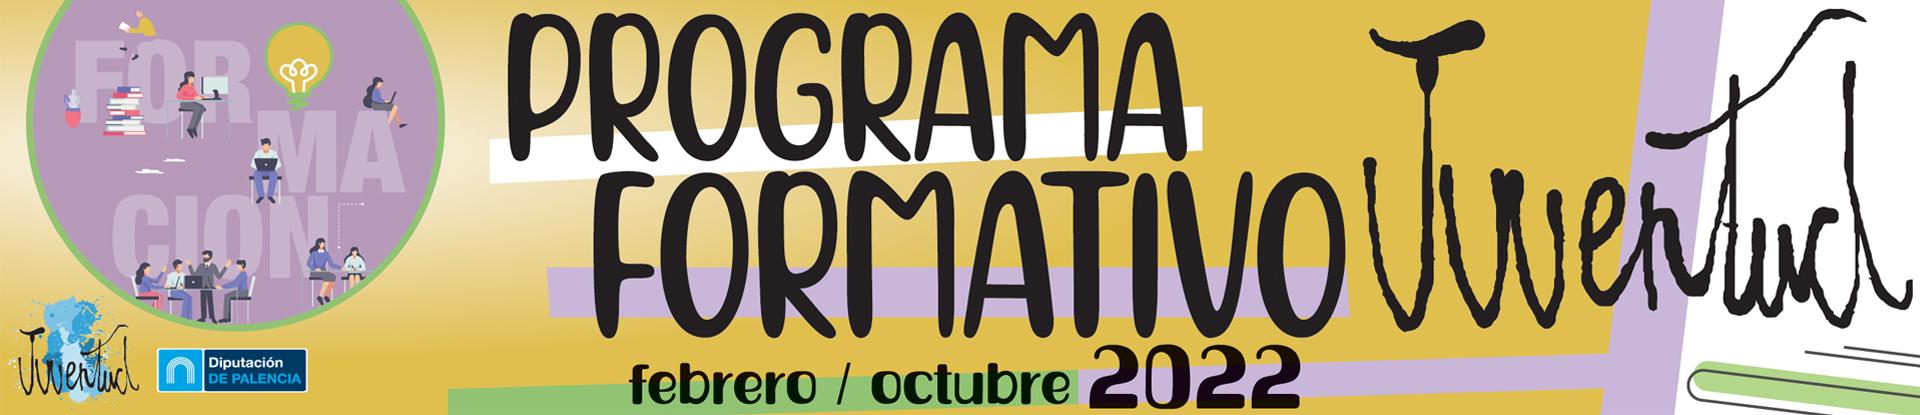 Banner Programa Formativo 2022